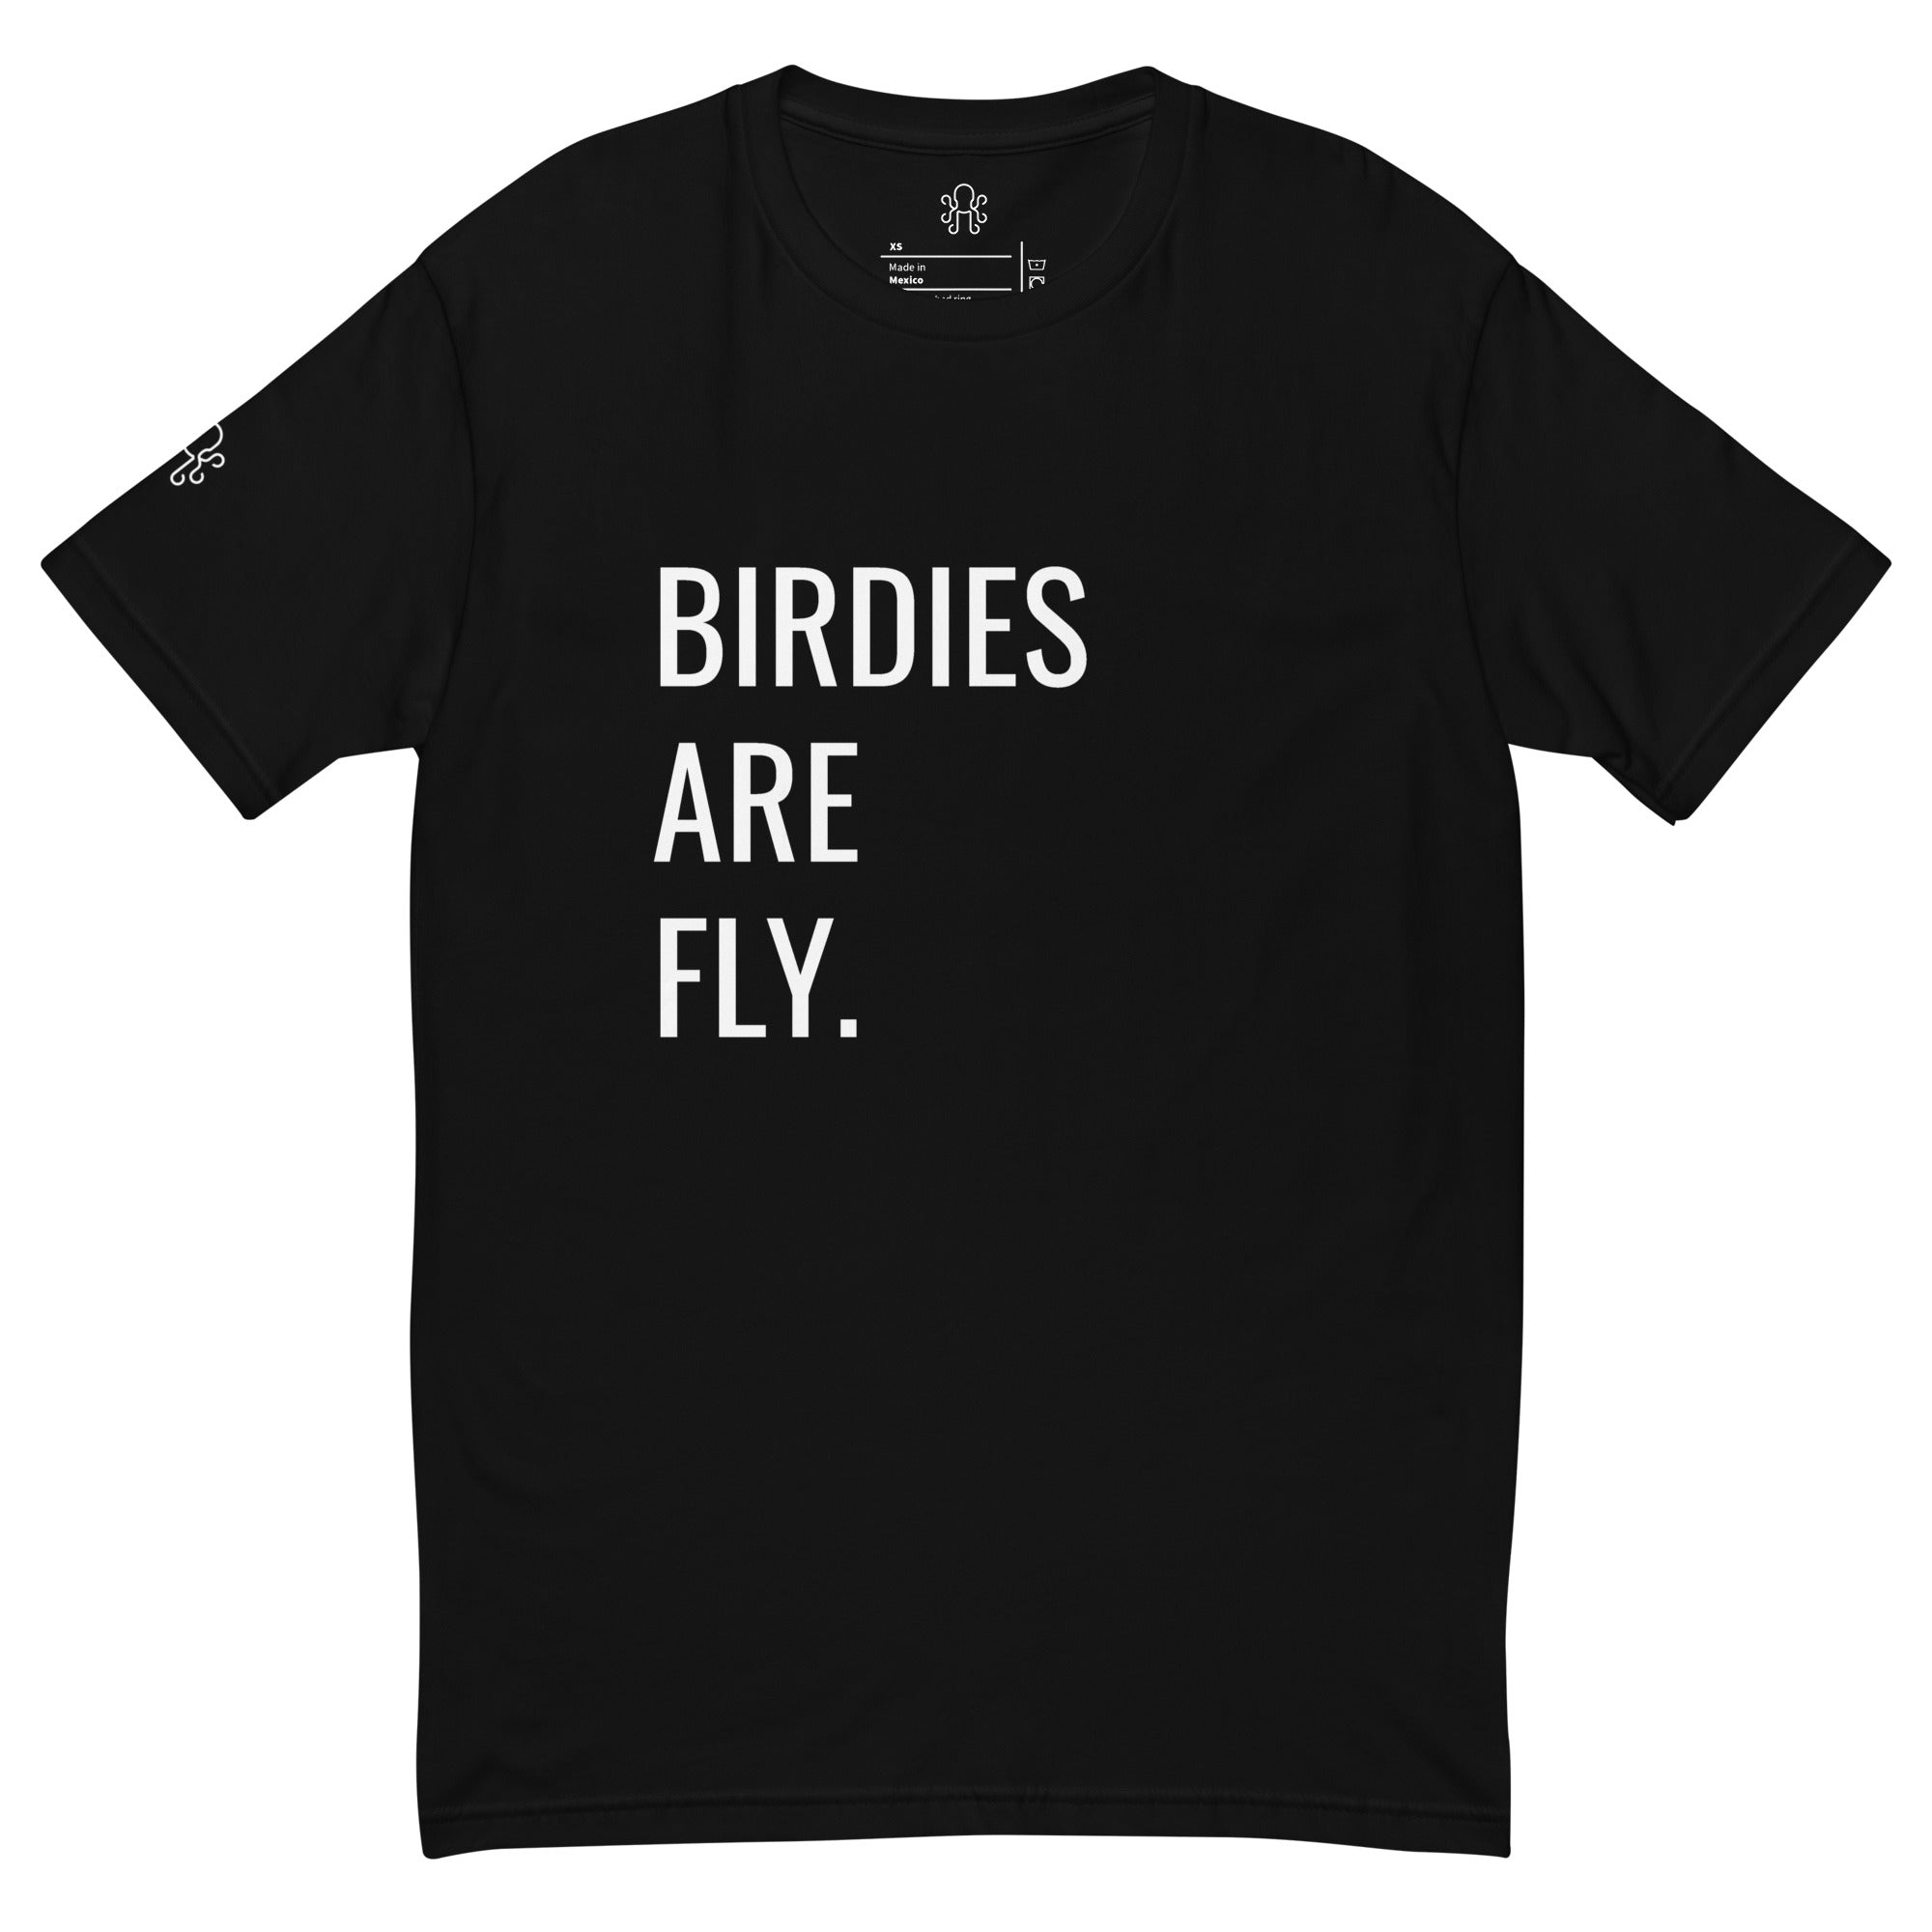 BIRDIES ARE FLY. T-Shirt Black - Kraken Golf